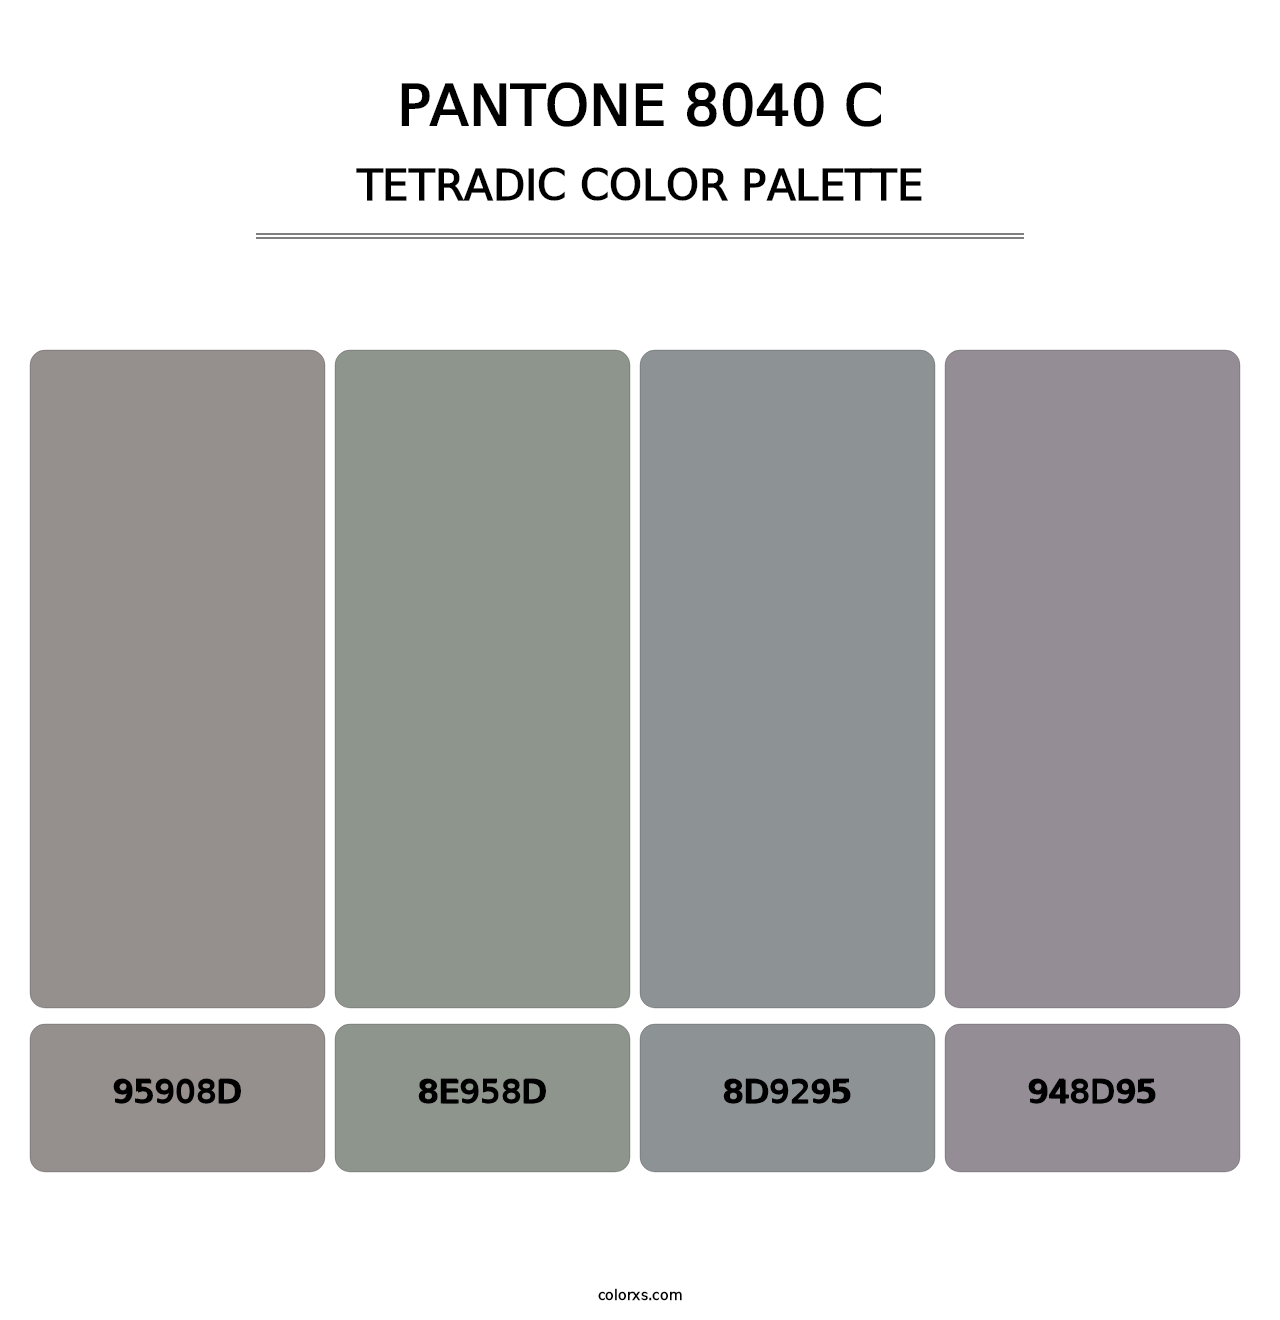 PANTONE 8040 C - Tetradic Color Palette